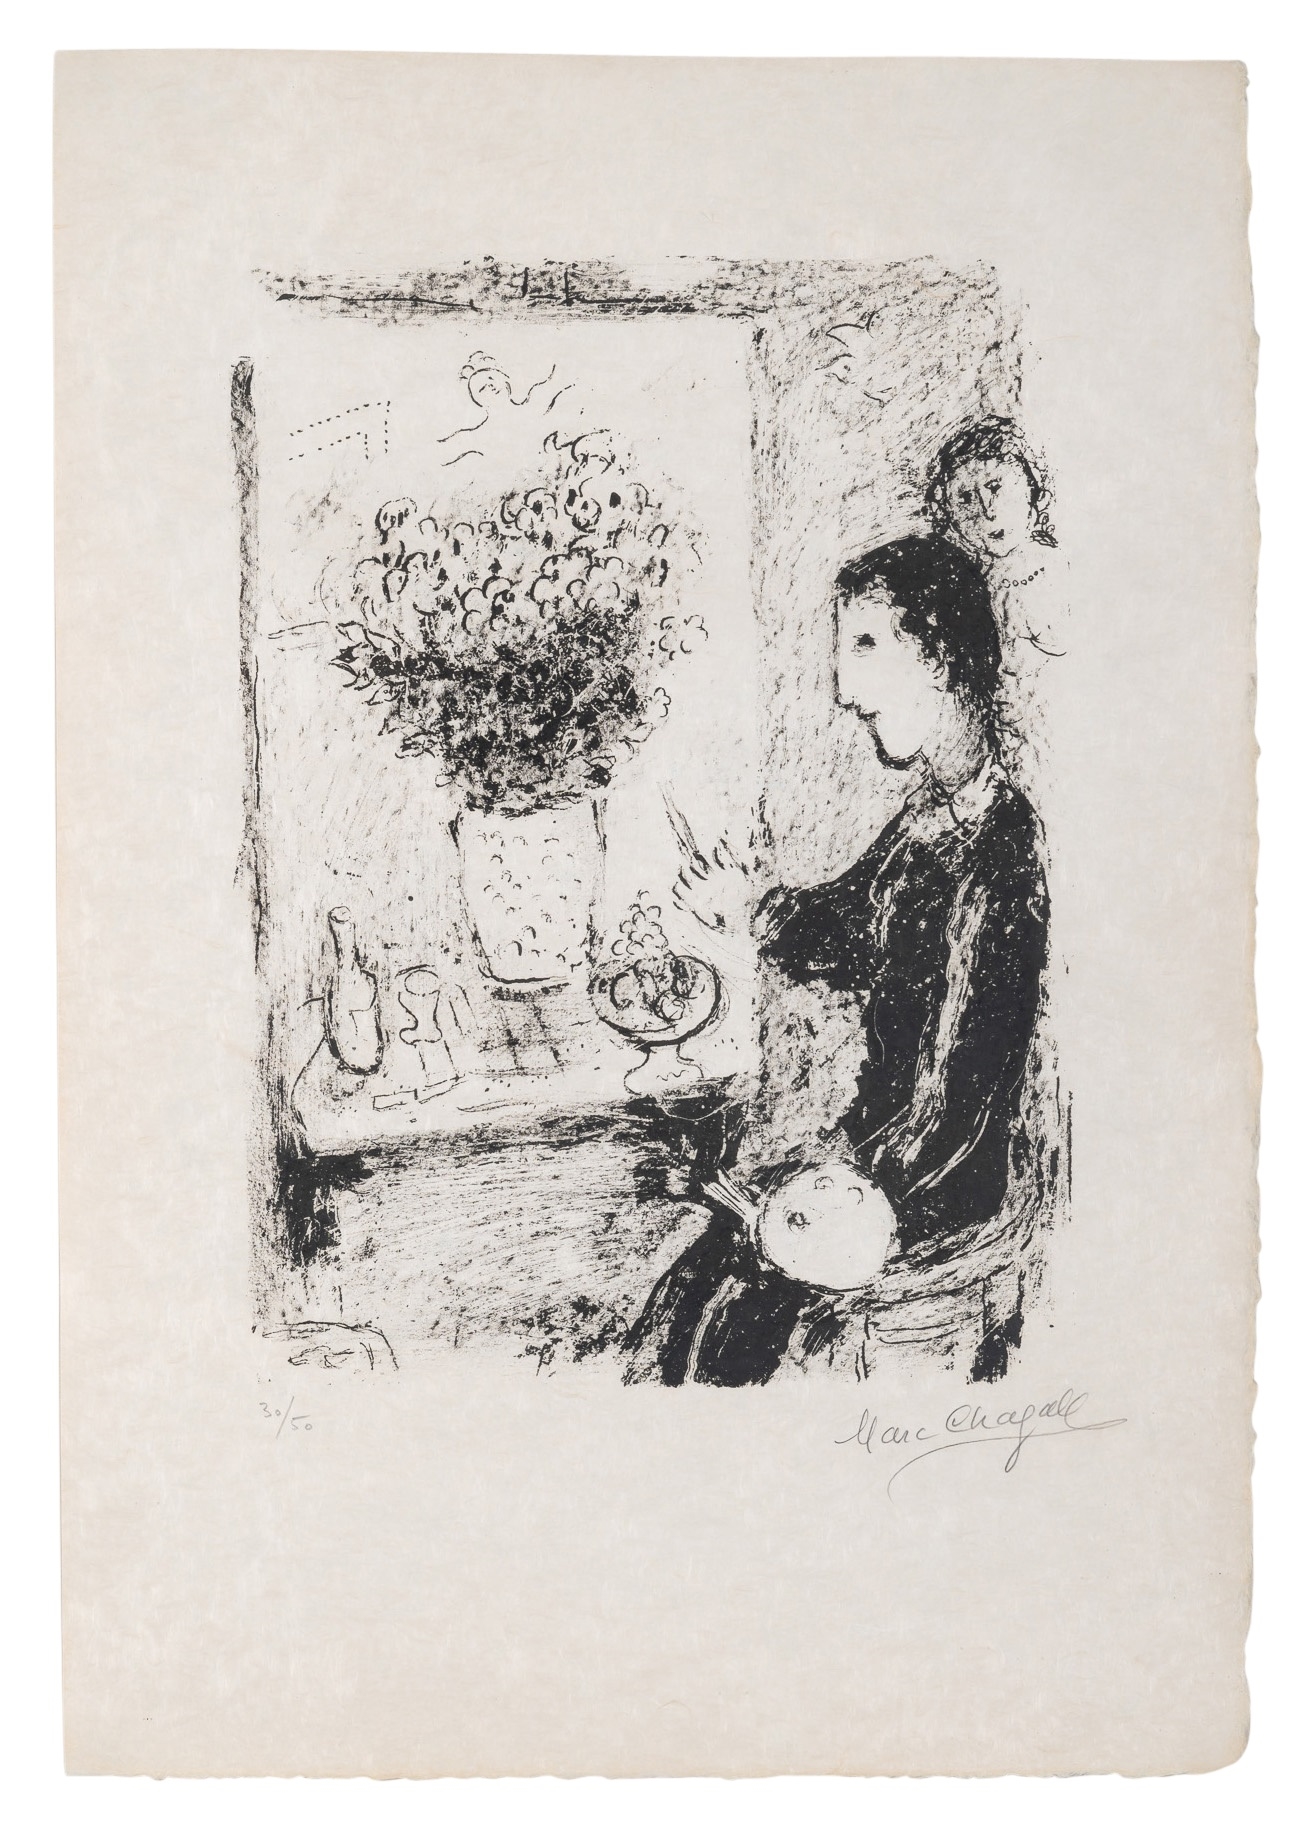 Marc Chagall (1887-1985 - Marc Chagall